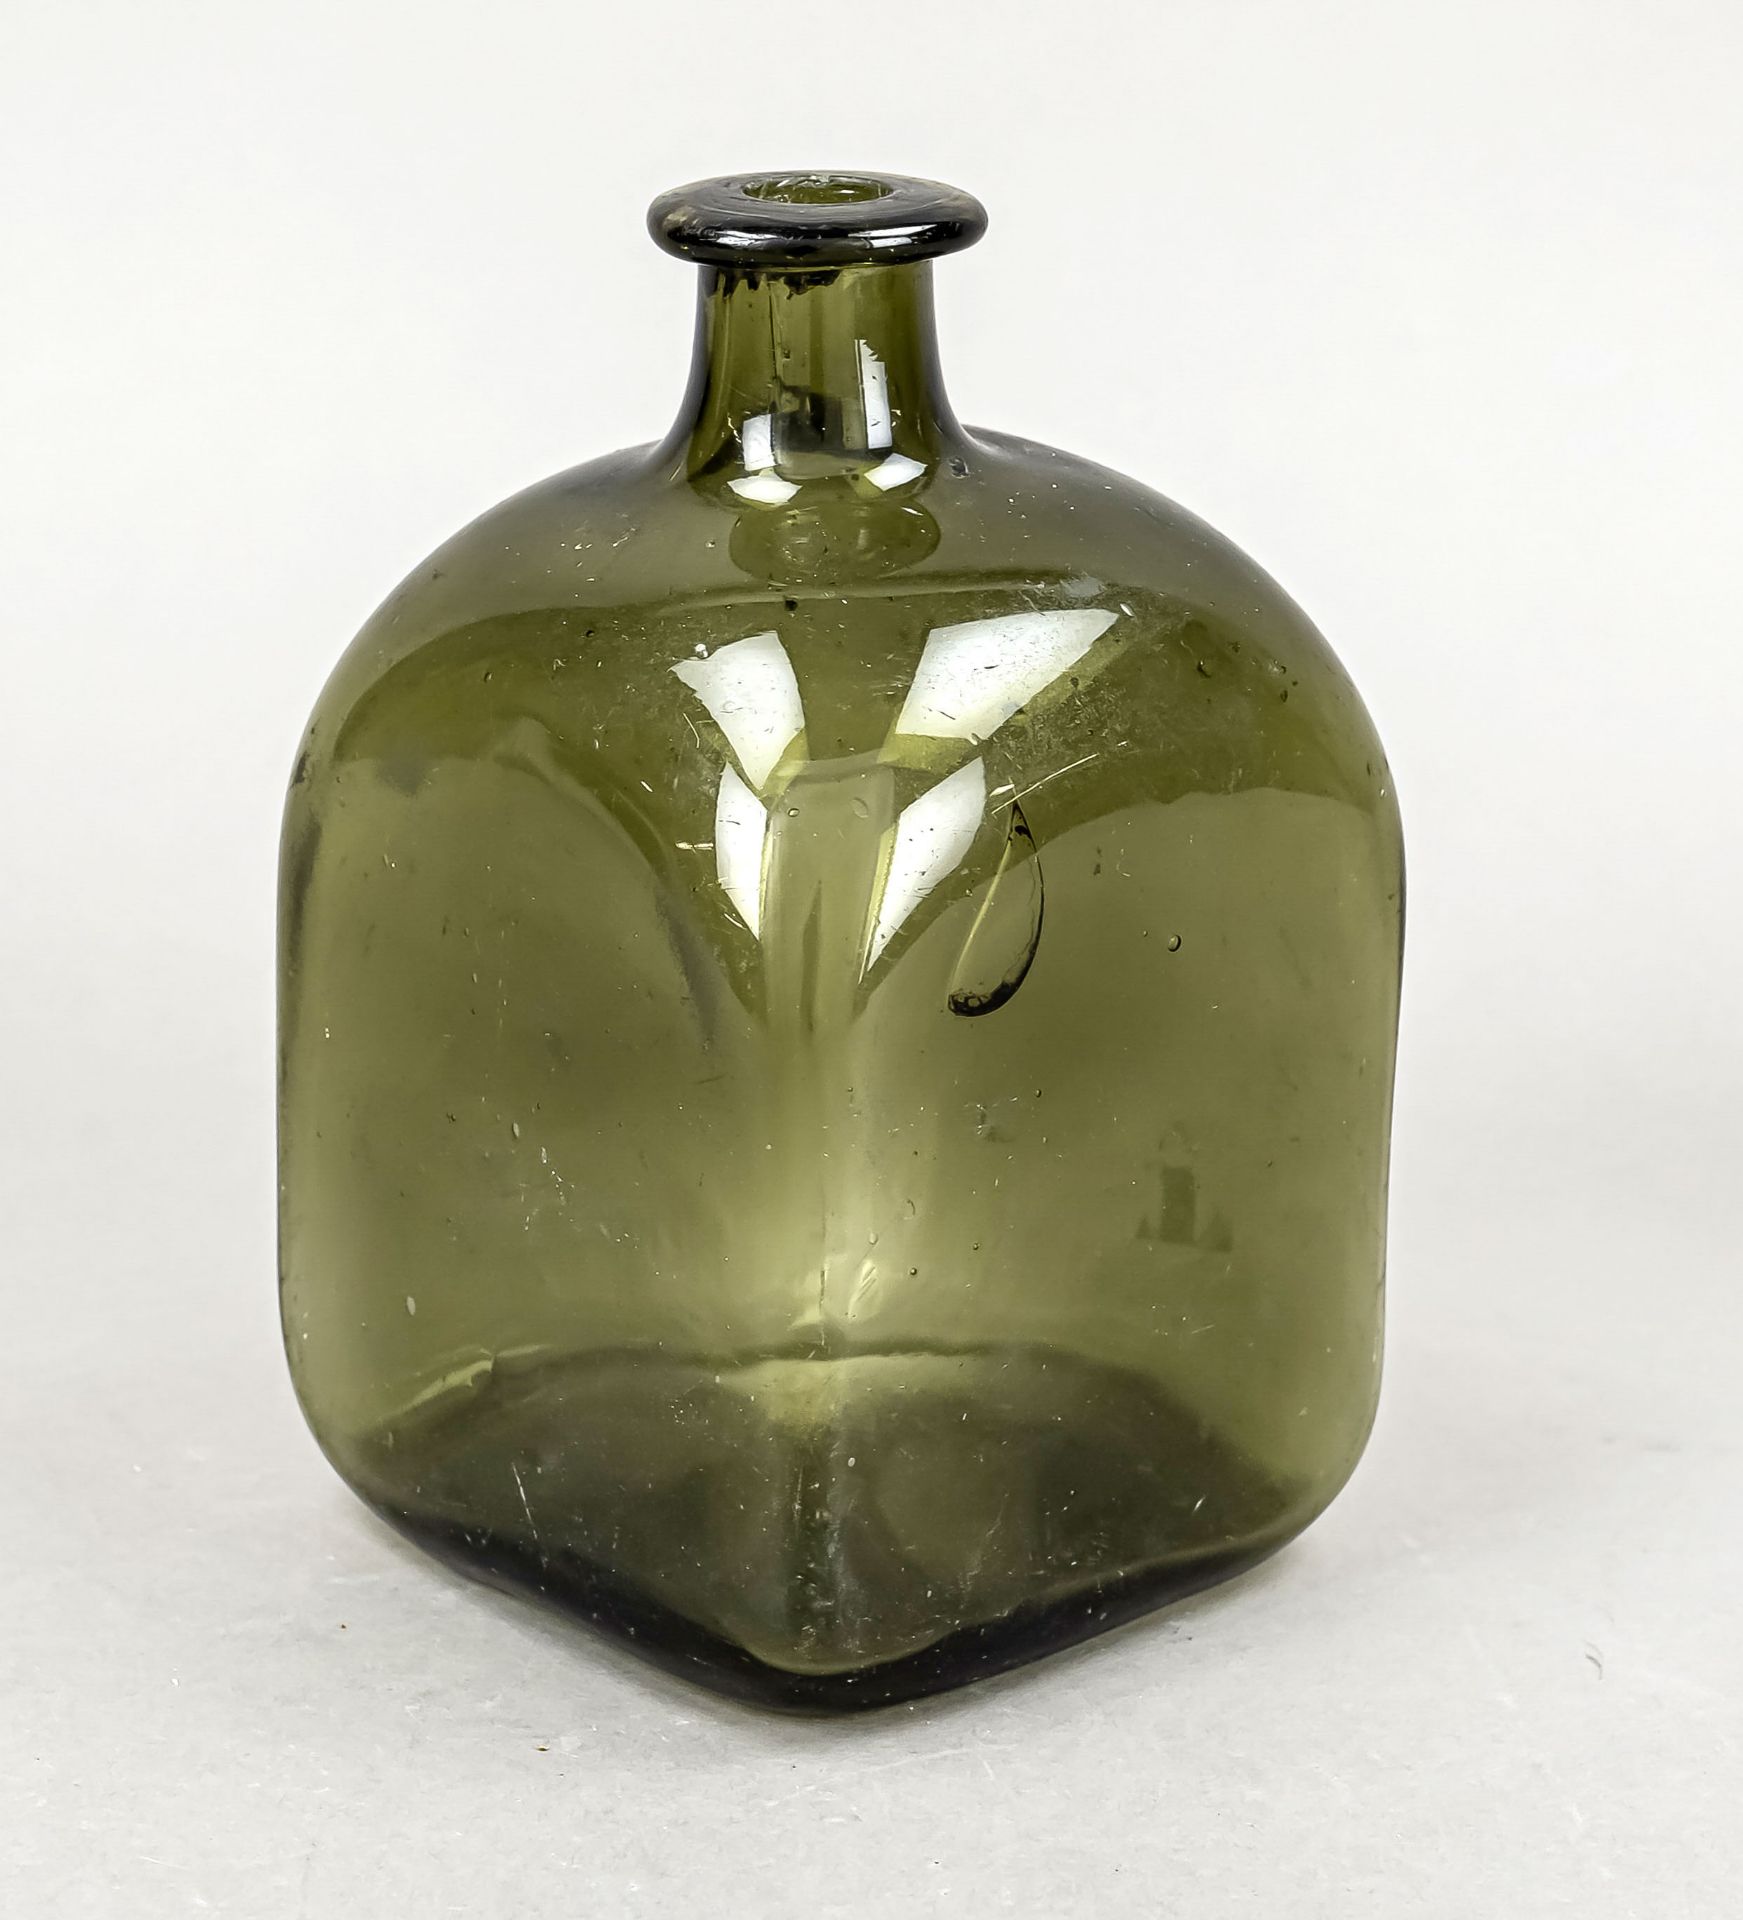 Wine bottle, 18th/19th c., square body with short slender neck, slightly curved bottom, dark green